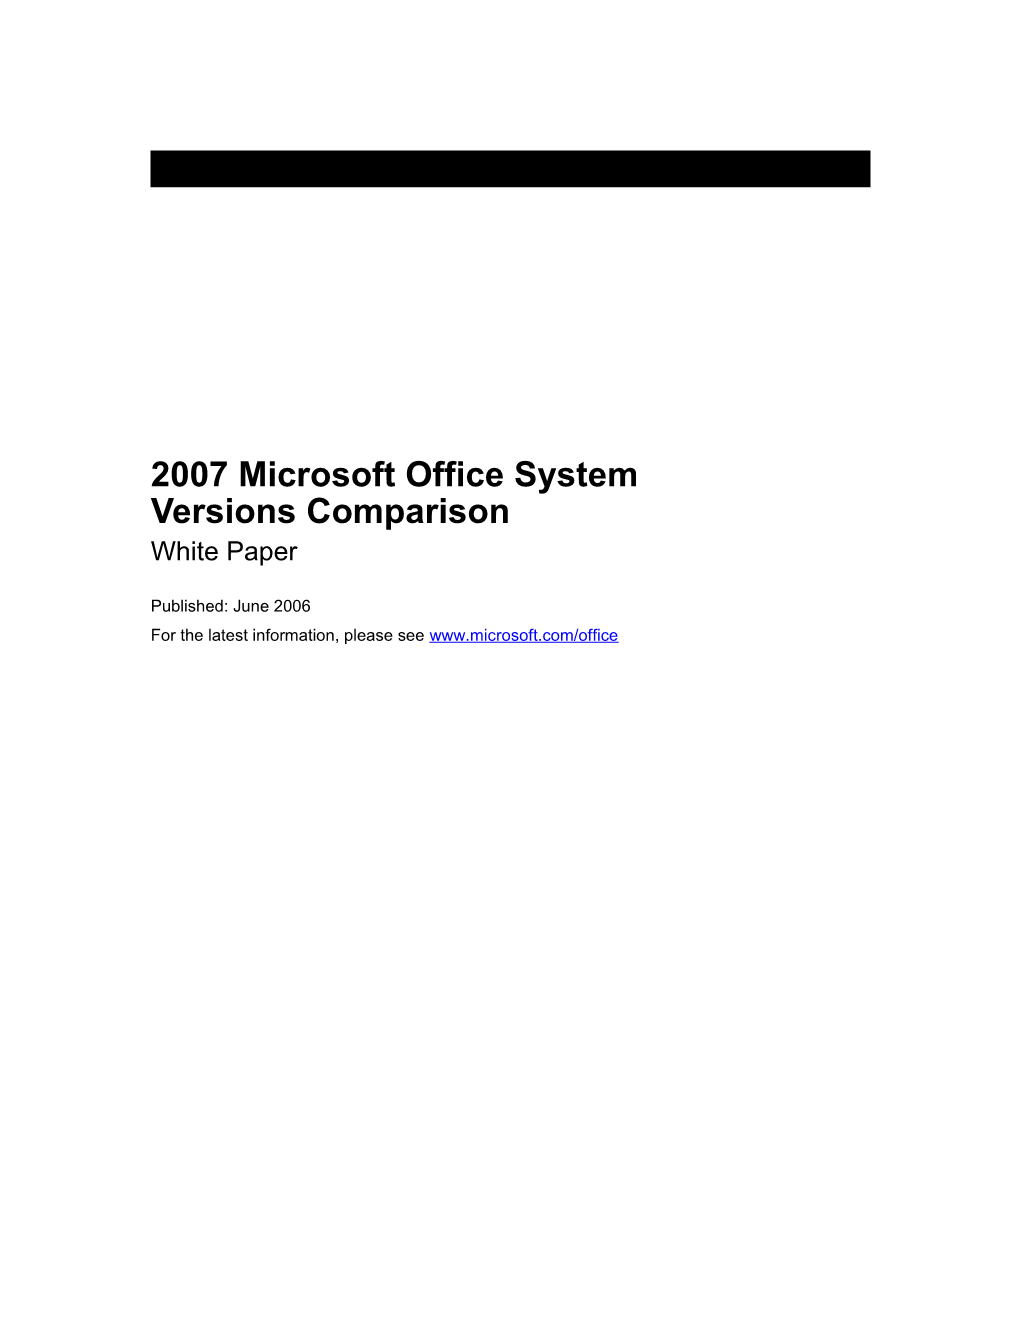 2007 Microsoft Office System Versions Comparison